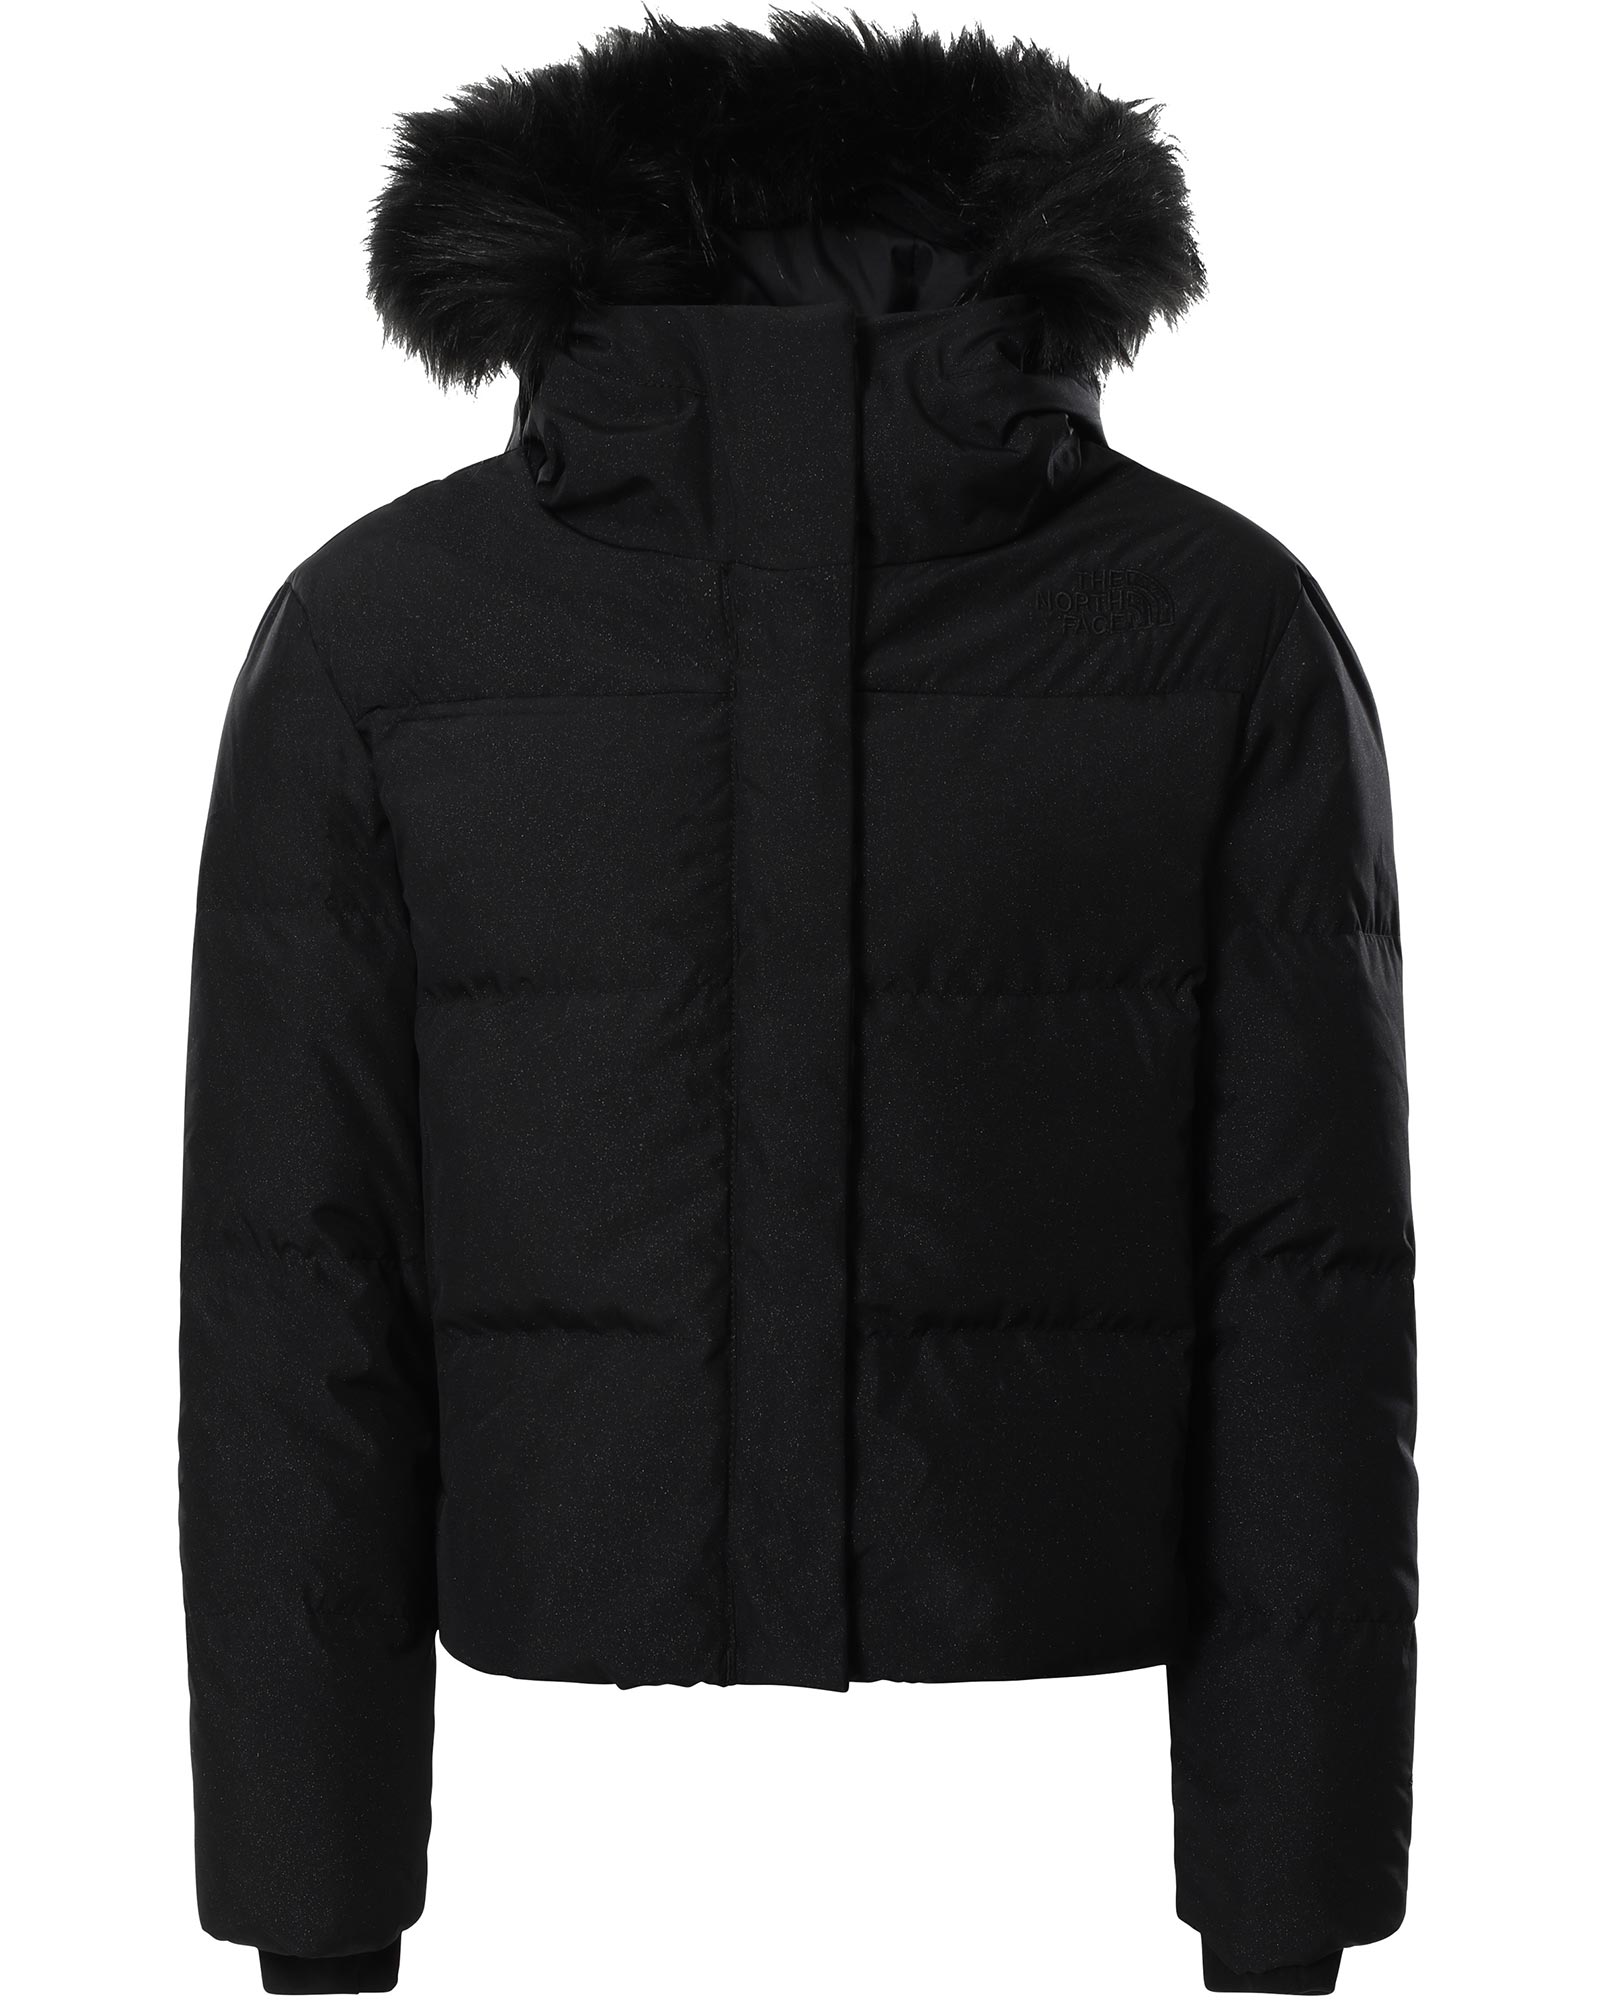 The North Face Dealio City Girls’ Jacket XL - TNF Black Sparkle XL